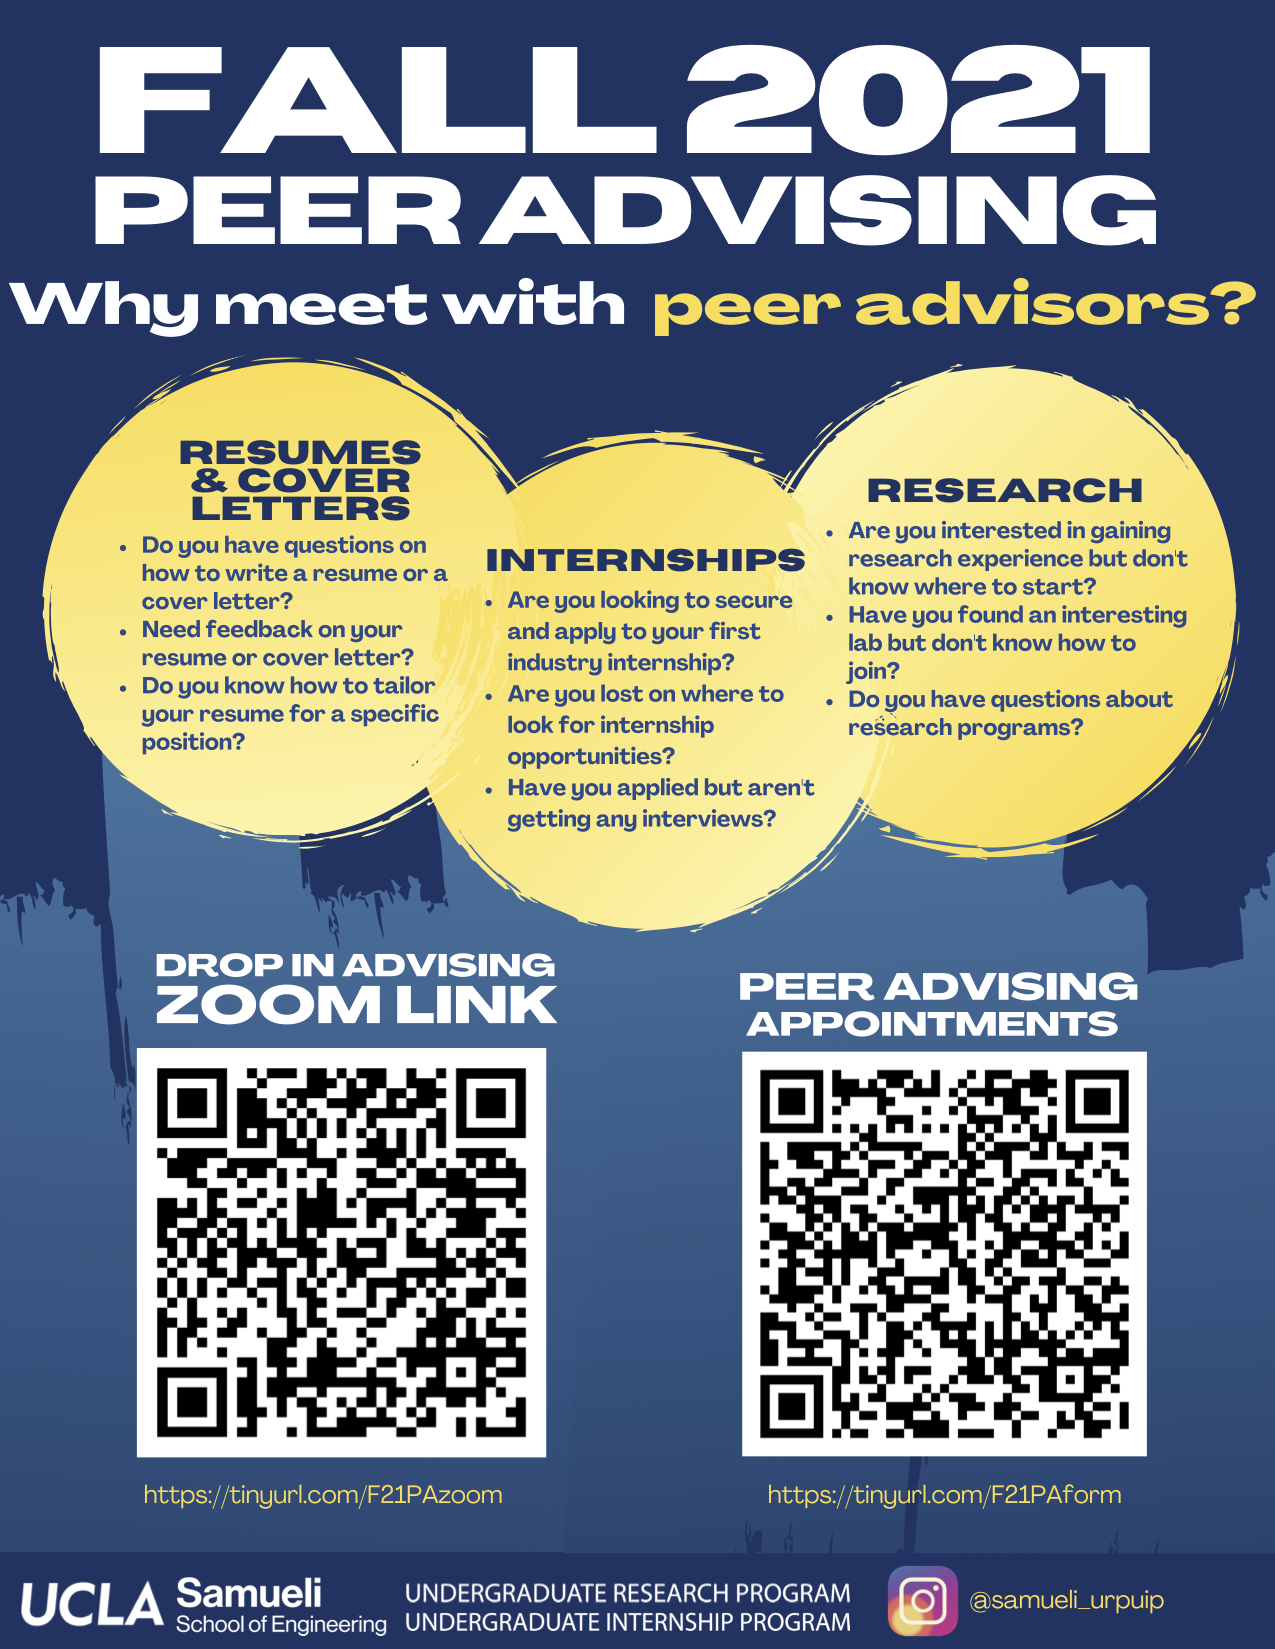 Why Meet with Peer Advisors?